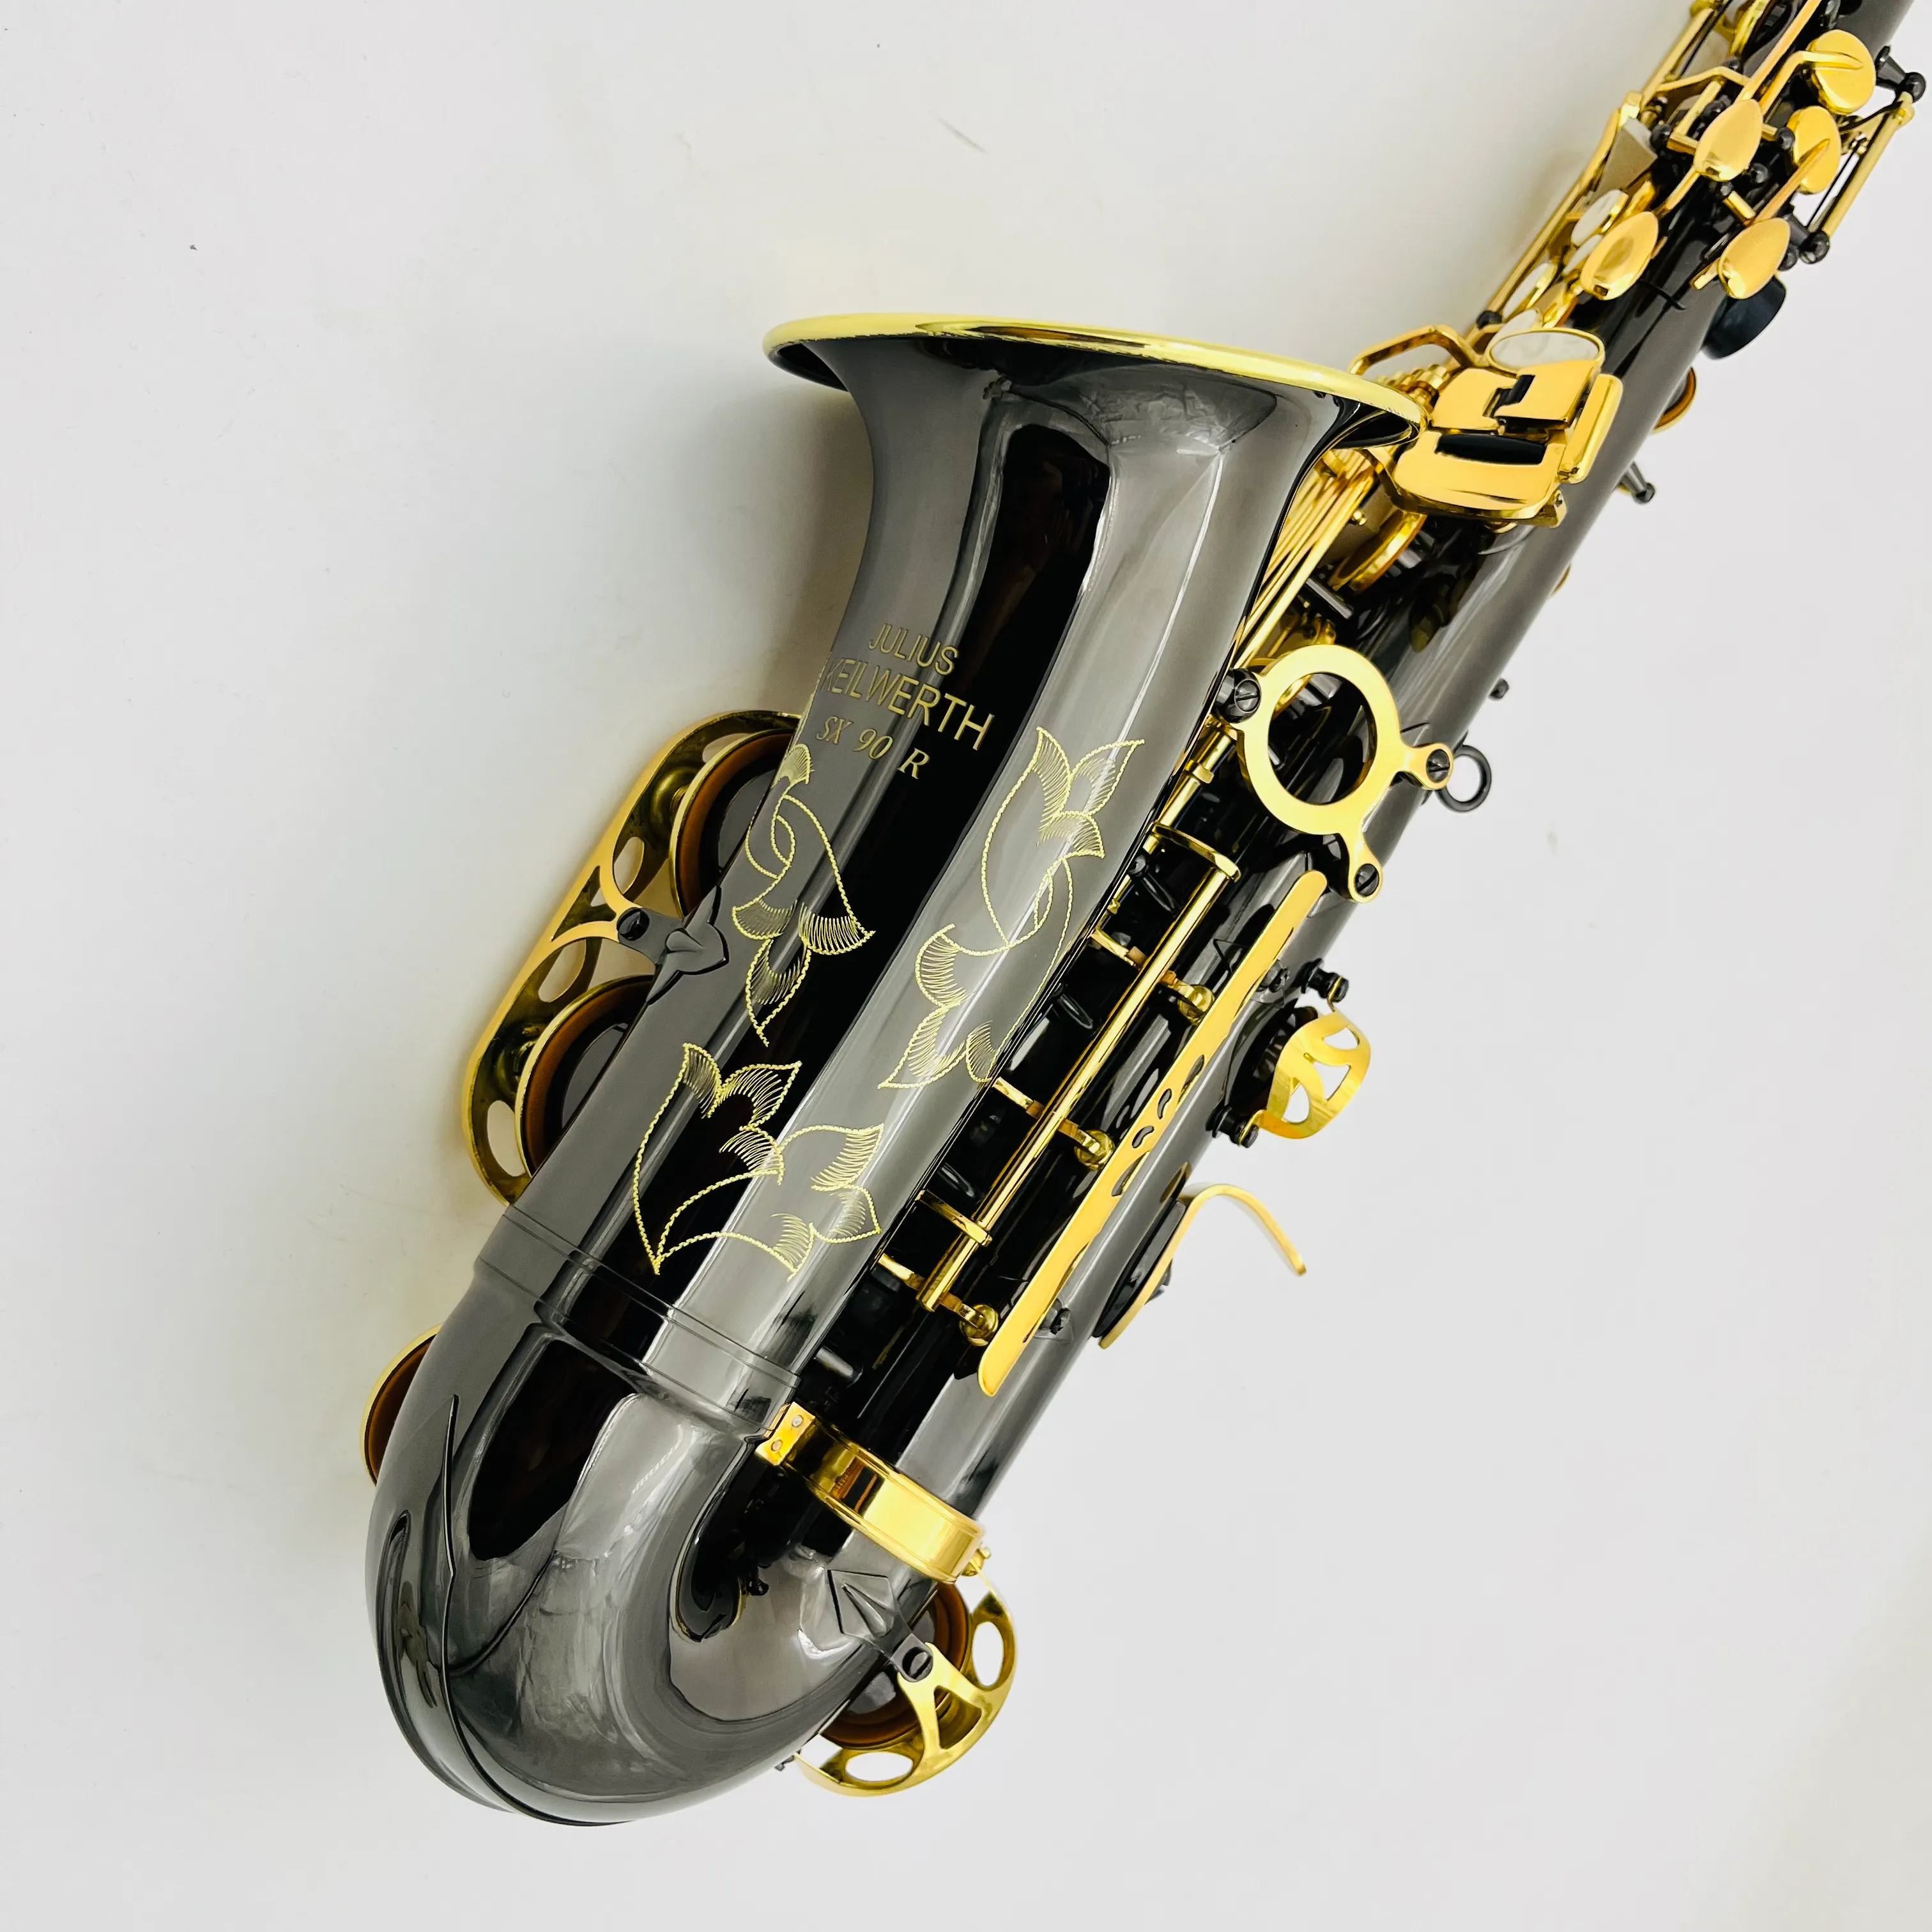 Saxofone Alto Profissional Keilwerth SX90R Brass preto níquel Gold Gold Eb Tune Sax Wood Musical Instrument com estojo